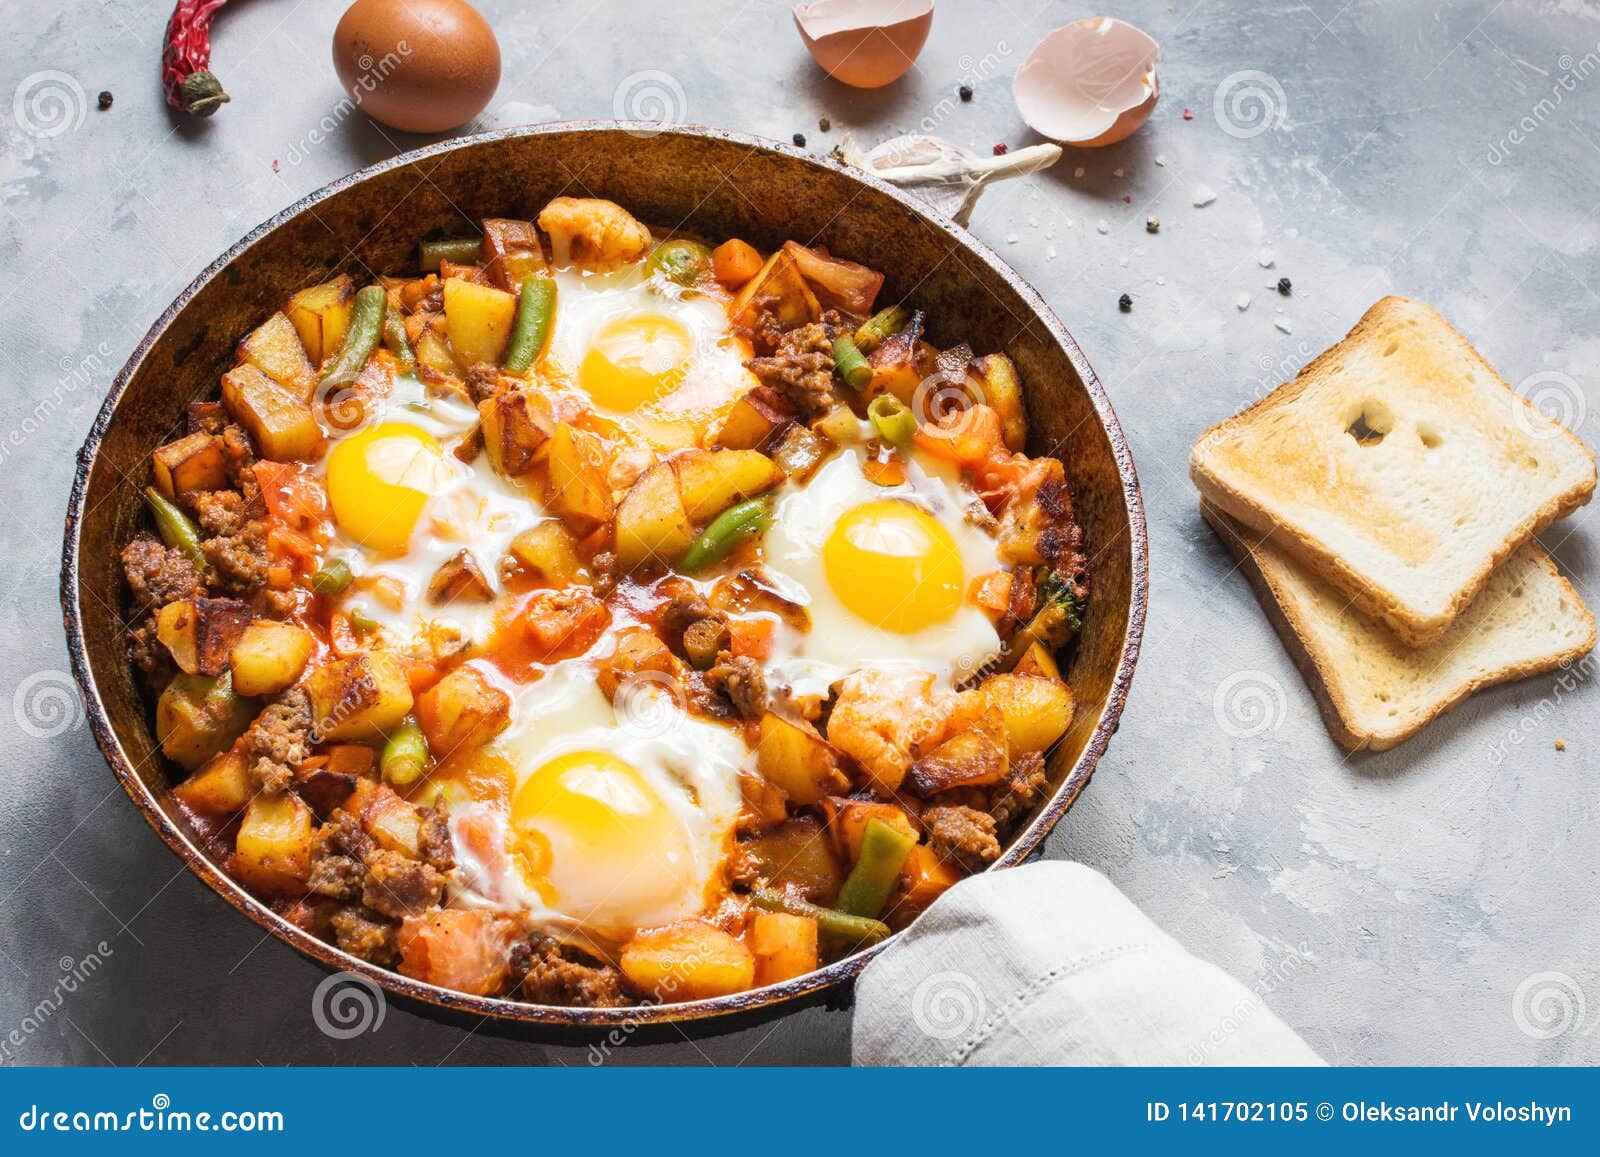 https://thumbs.dreamstime.com/z/homemade-hearty-breakfast-skillet-eggs-potatoes-minced-meat-concrete-table-141702105.jpg